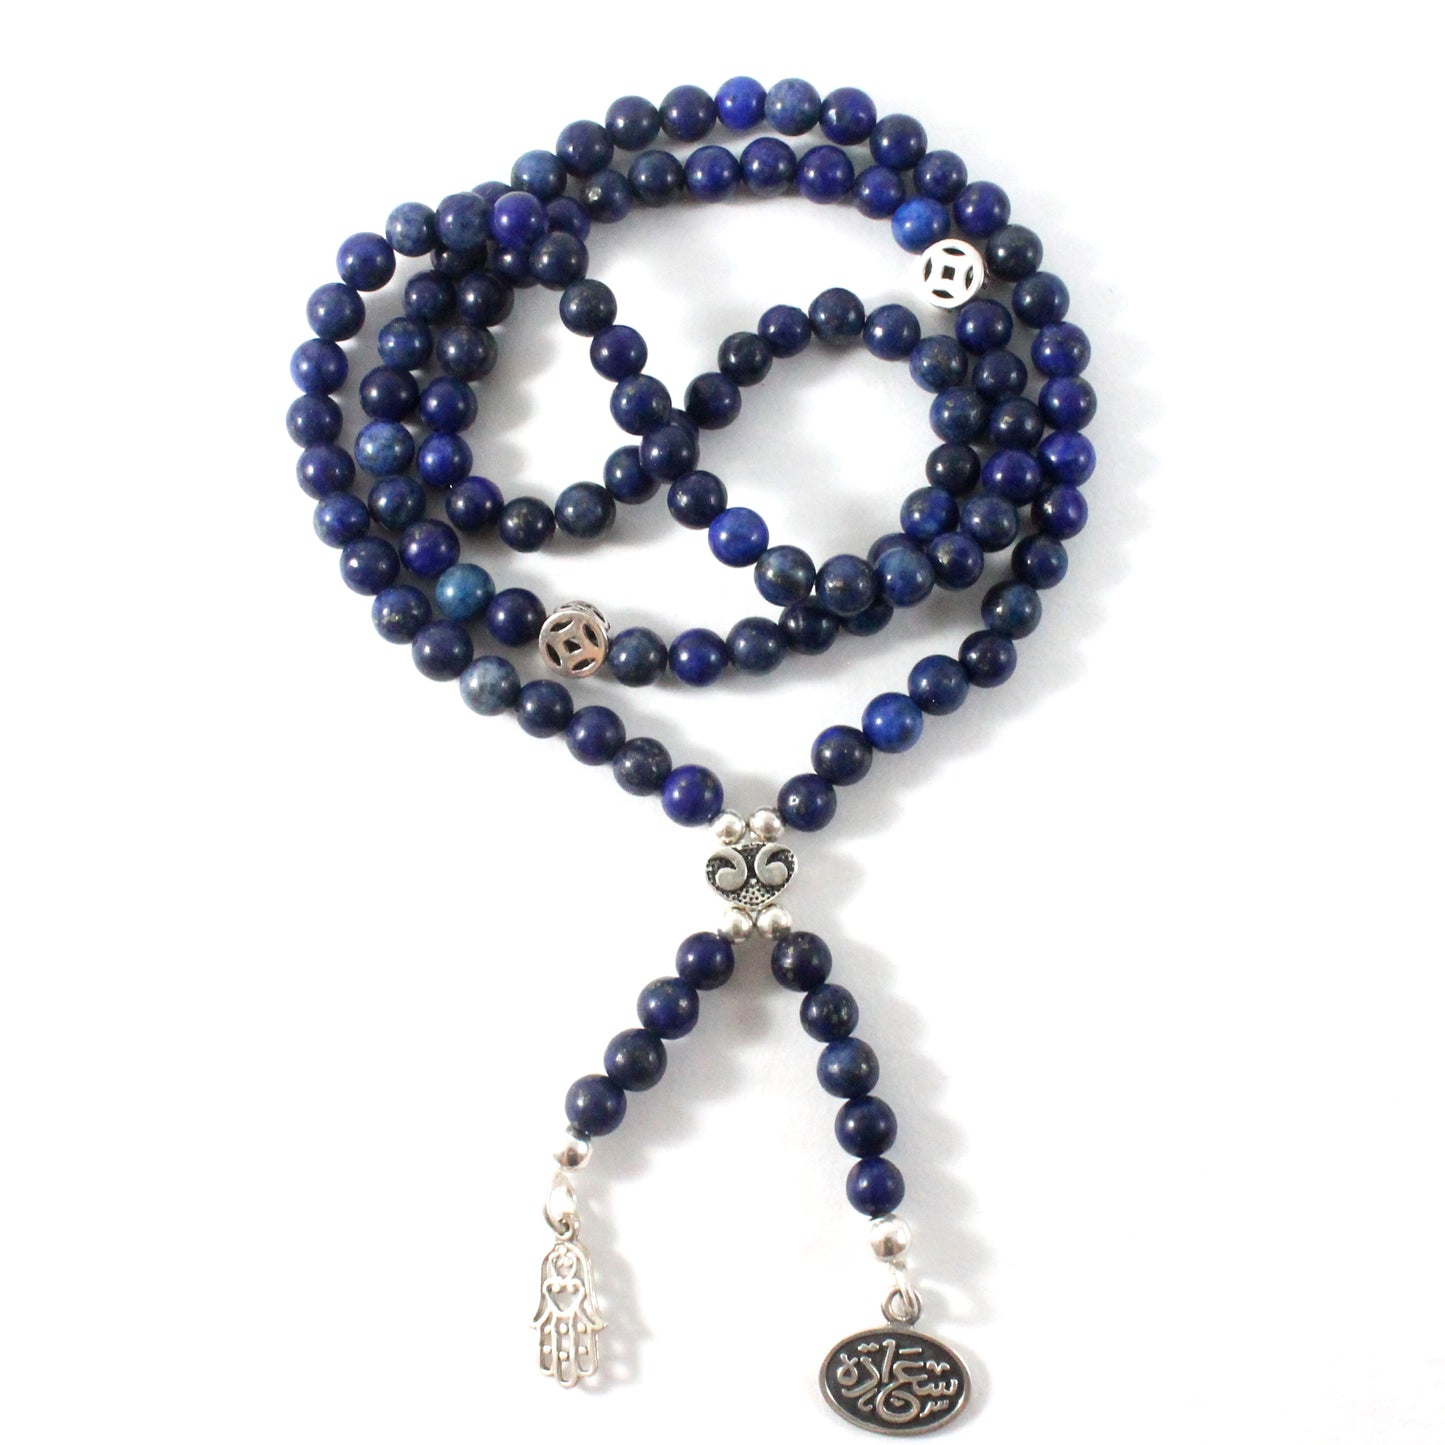 3-in-1 Lapis Lazuli Necklace/Bracelet/Prayer beads -The Ricci District